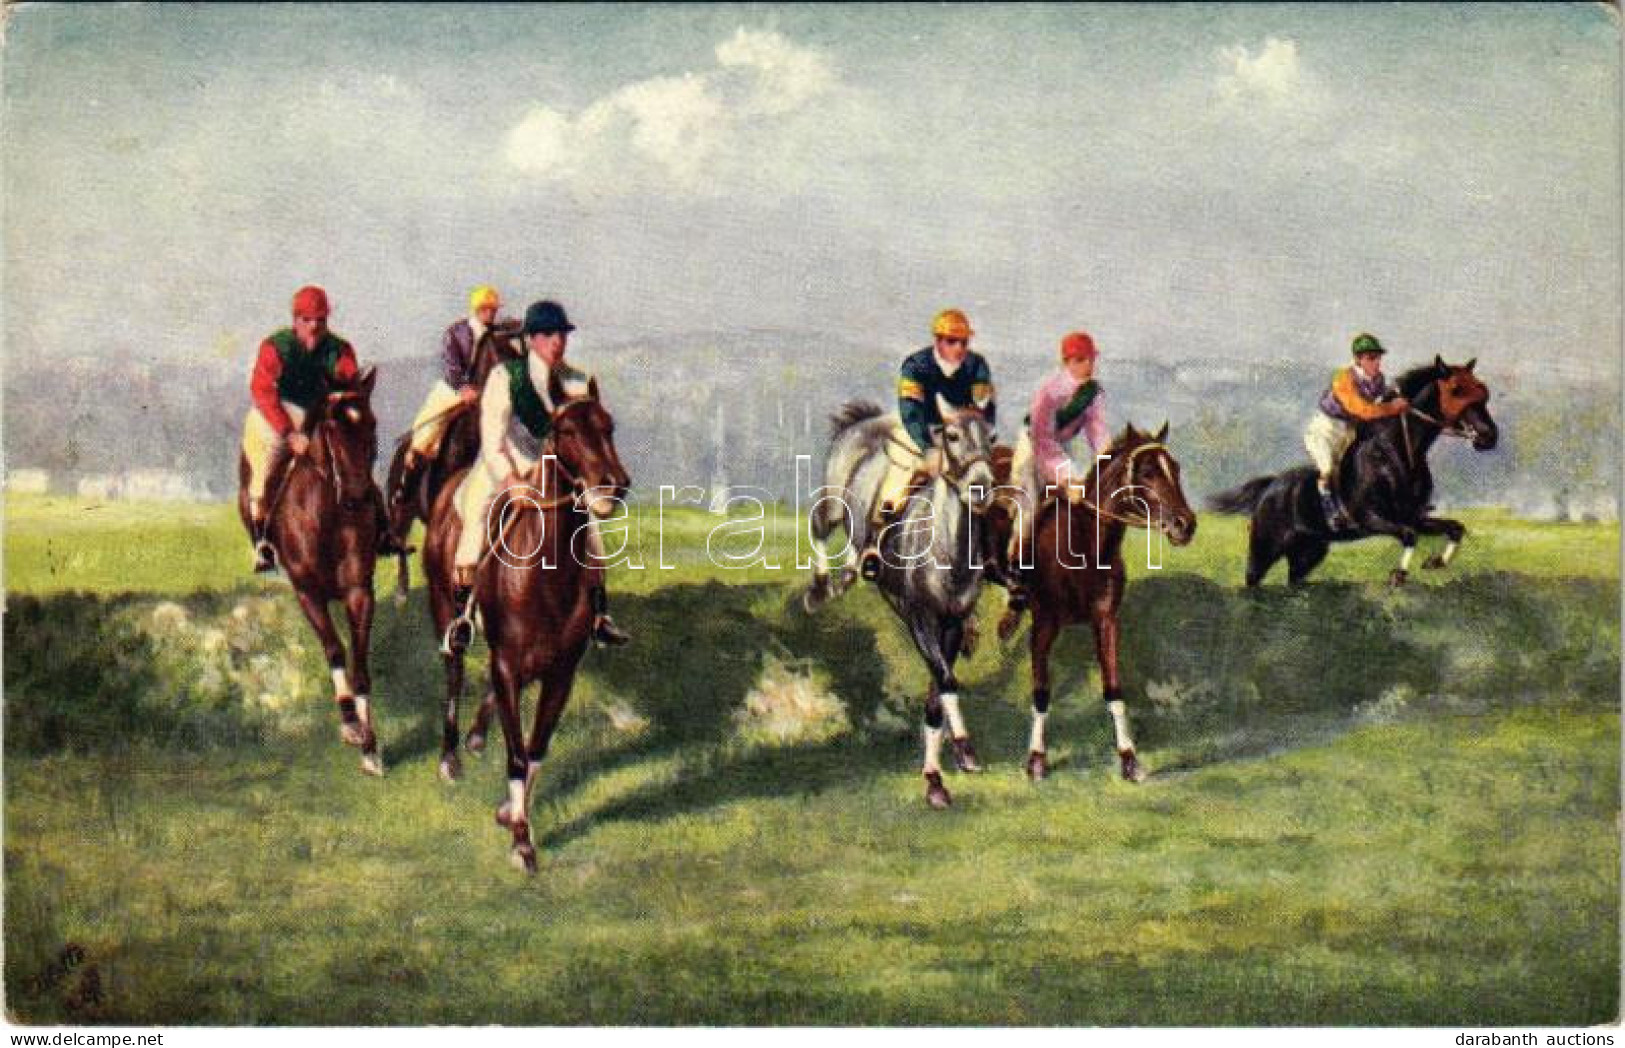 T2/T3 1912 "Steeplechasing" Series III. Keeping Together. Raphael Tuck & Sons "Oilette" Postcard 9522. (EK) - Unclassified